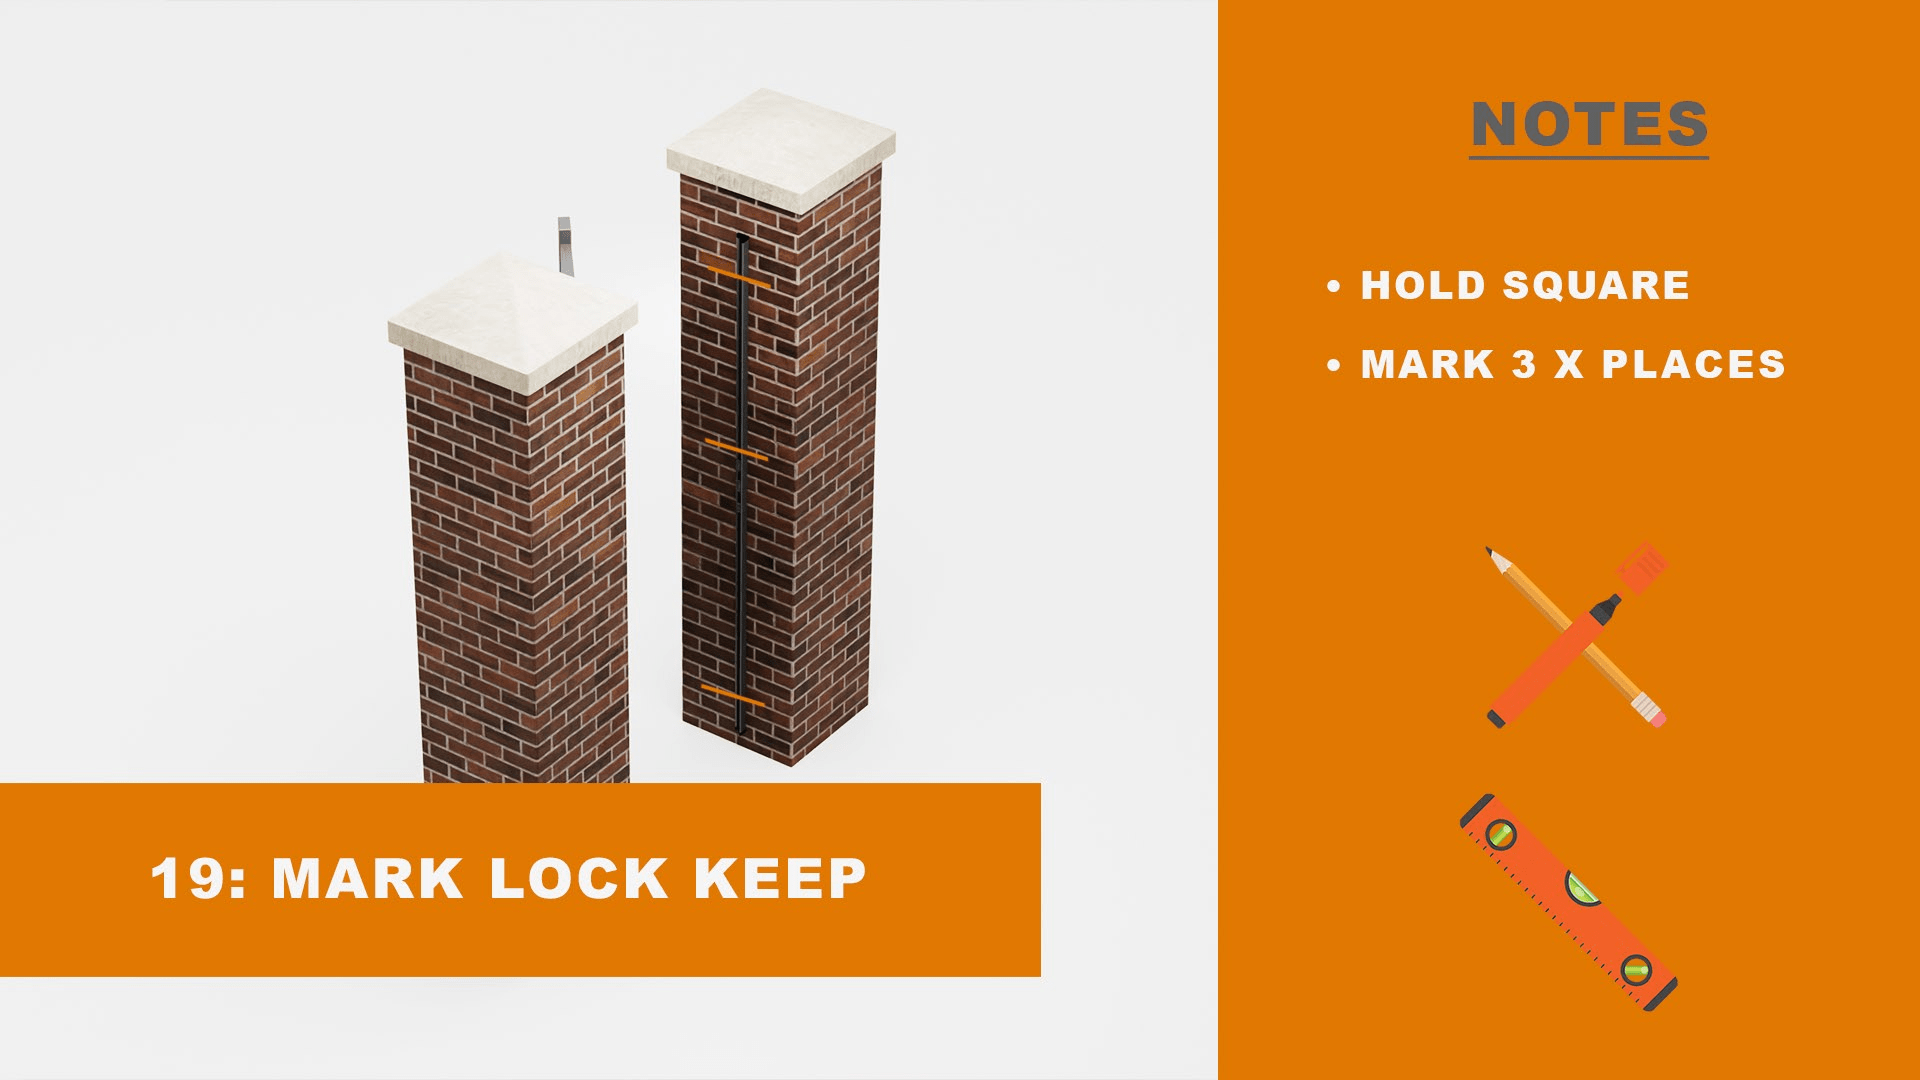 Makr lock keep